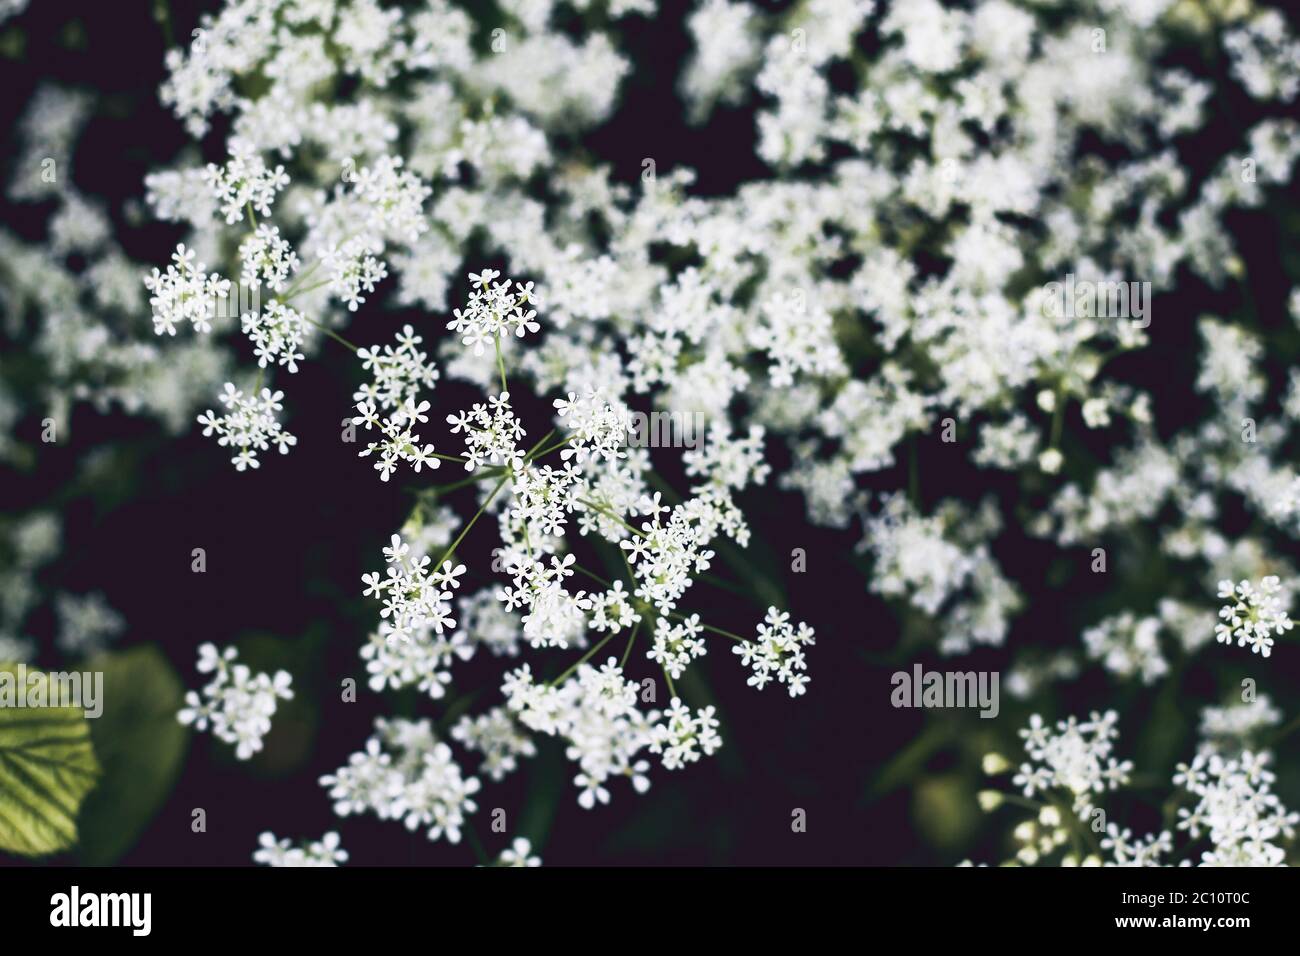 Hemlock white springtime flowers blooming Stock Photo